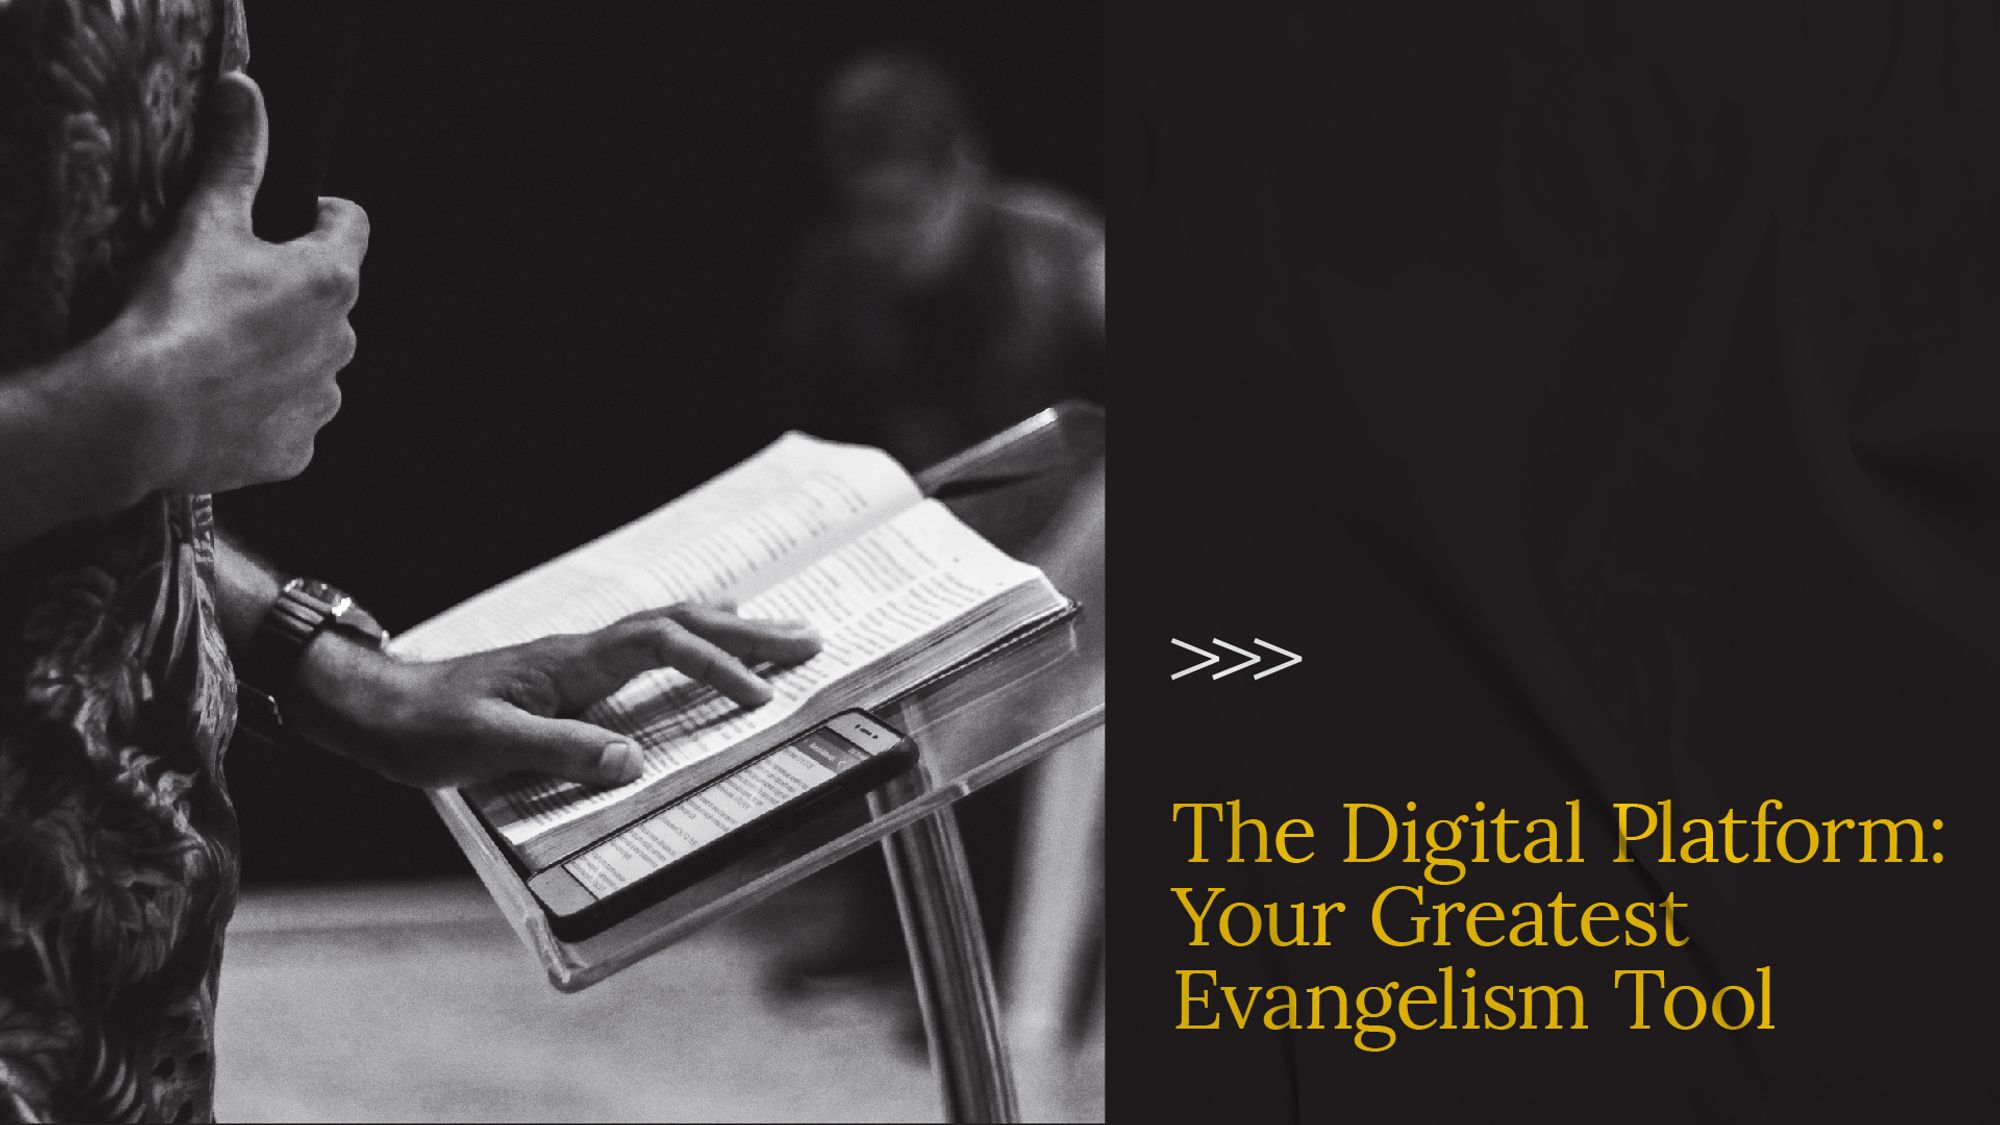 The Digital Platform: Your Greatest Evangelism Tool